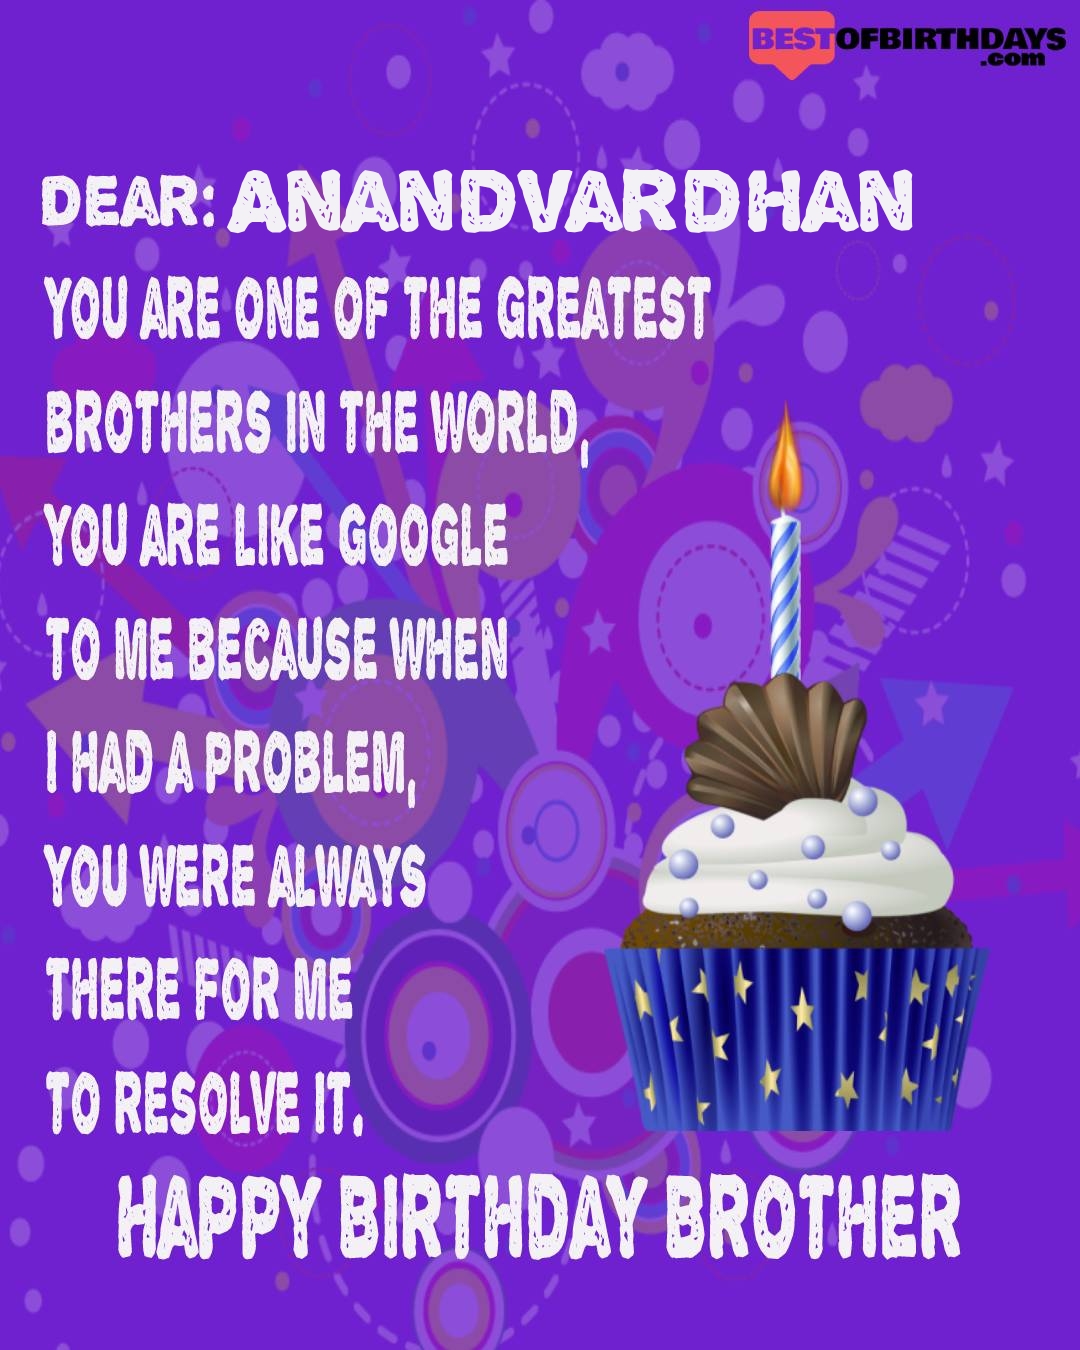 Happy birthday anandvardhan bhai brother bro